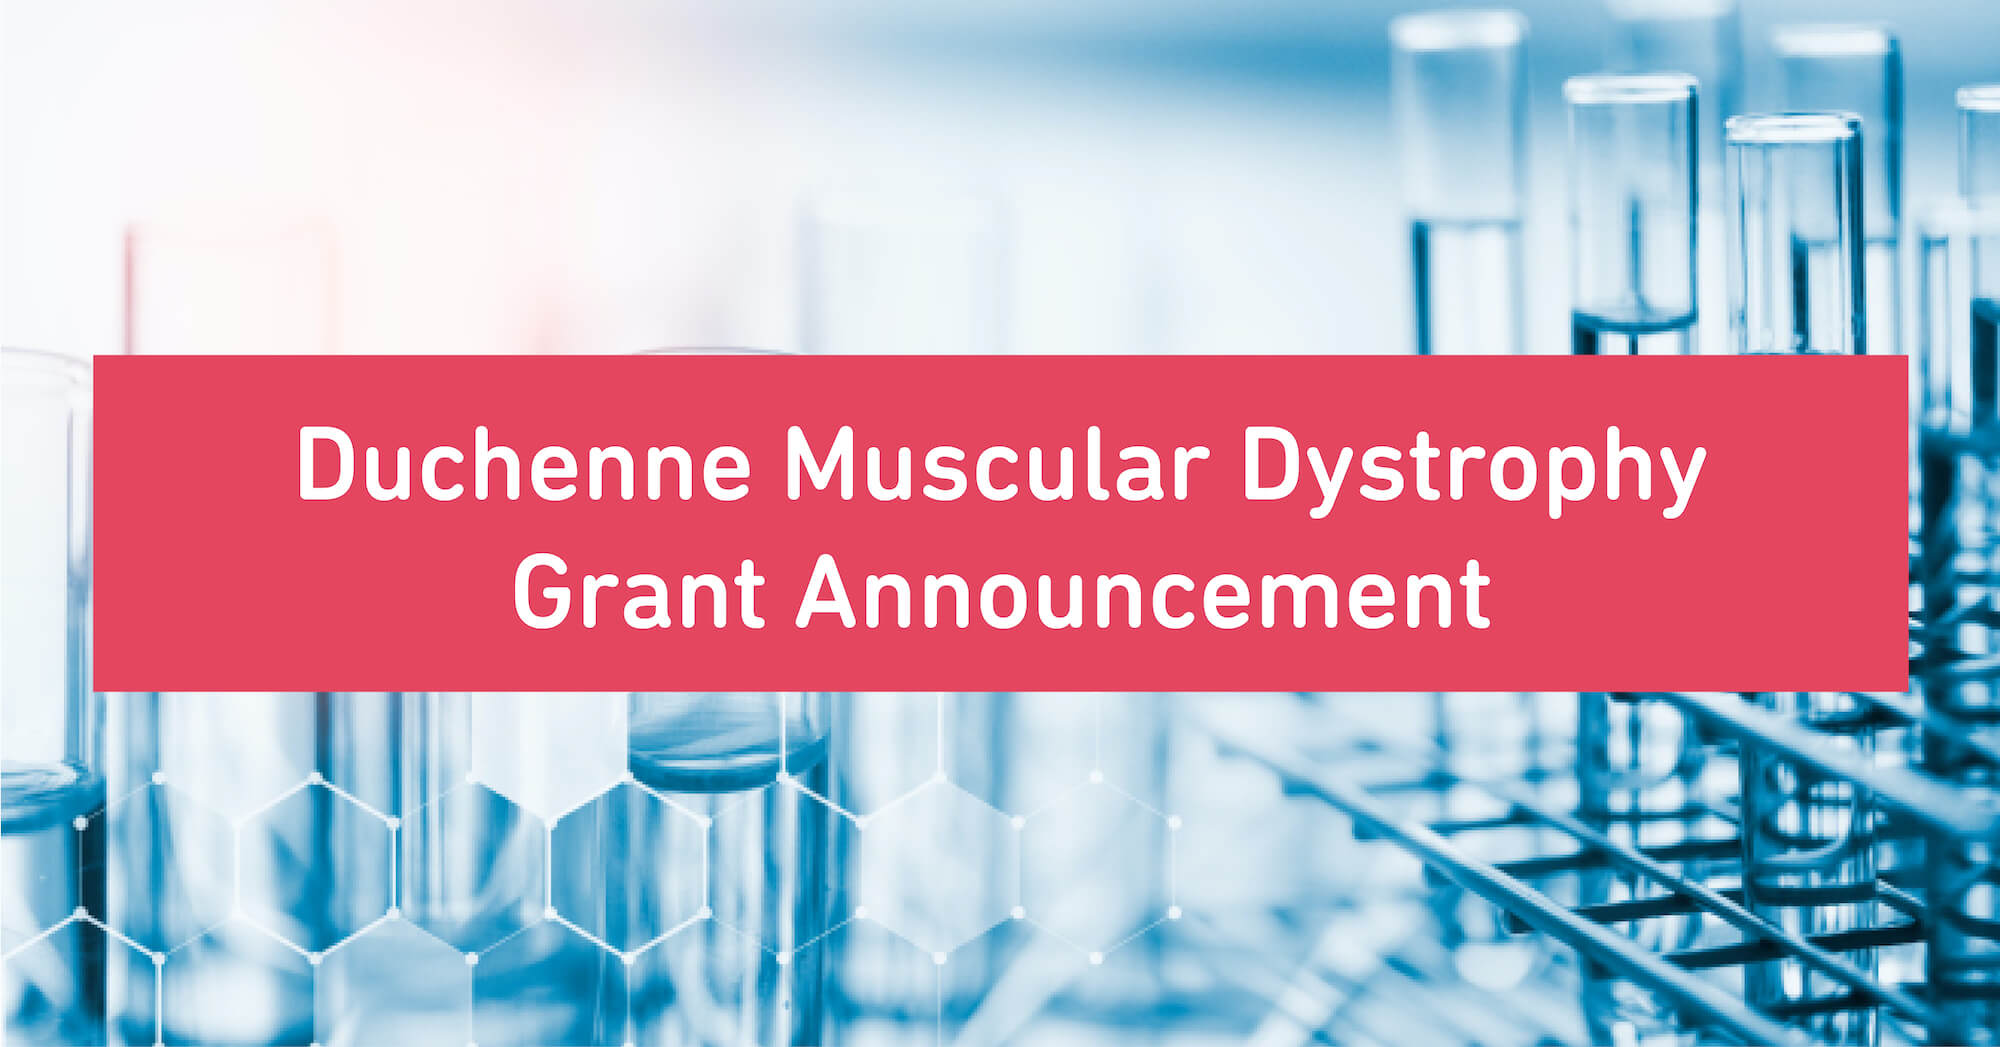 Duchenne Muscular Dystrophy Grant Announcement.